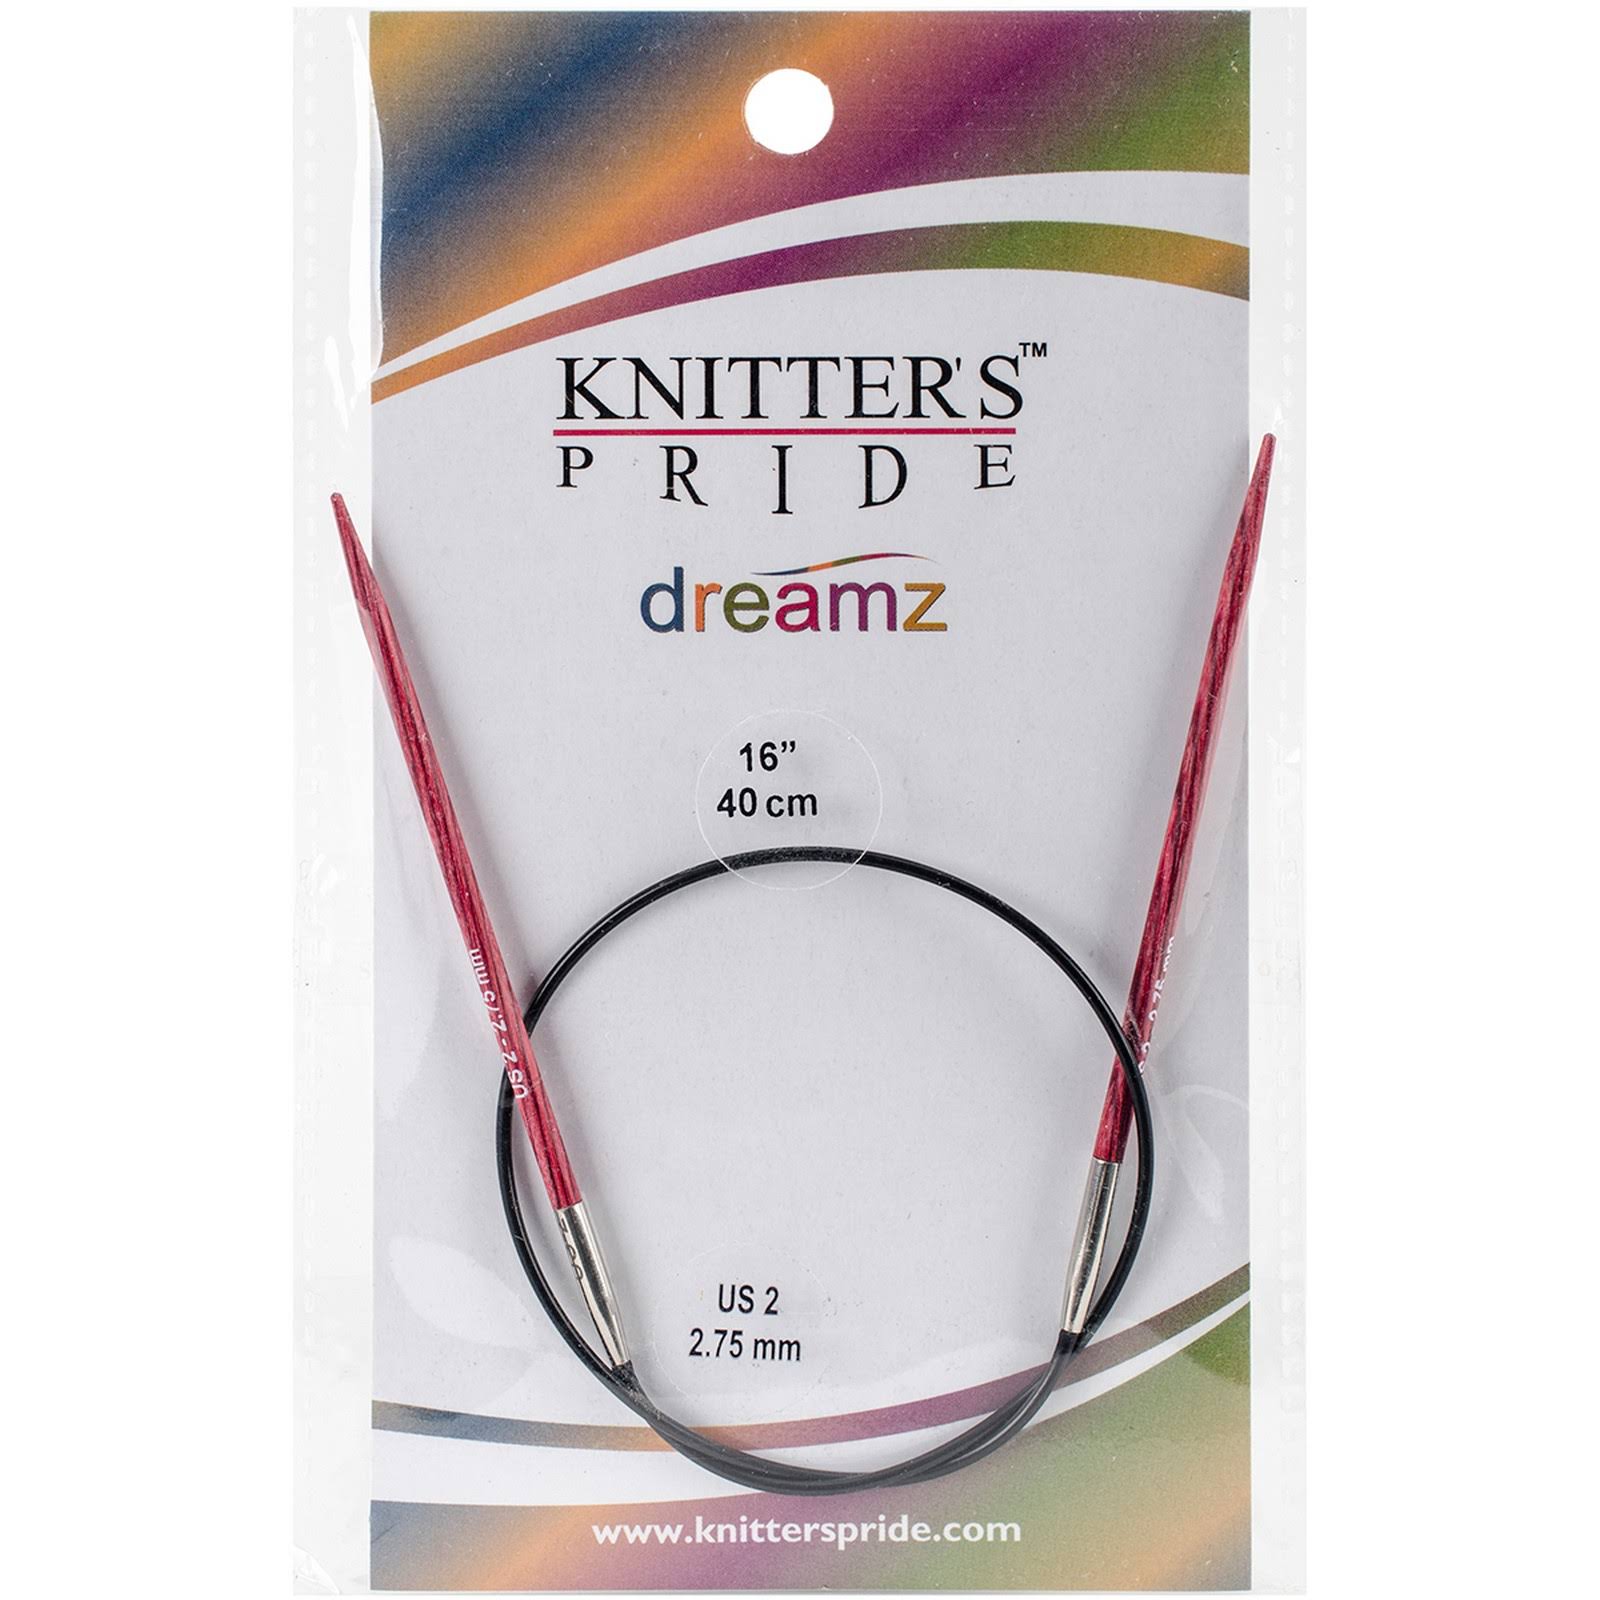 Knitters Pride Dreamz Circular Knitting Needles - 16", Size 7